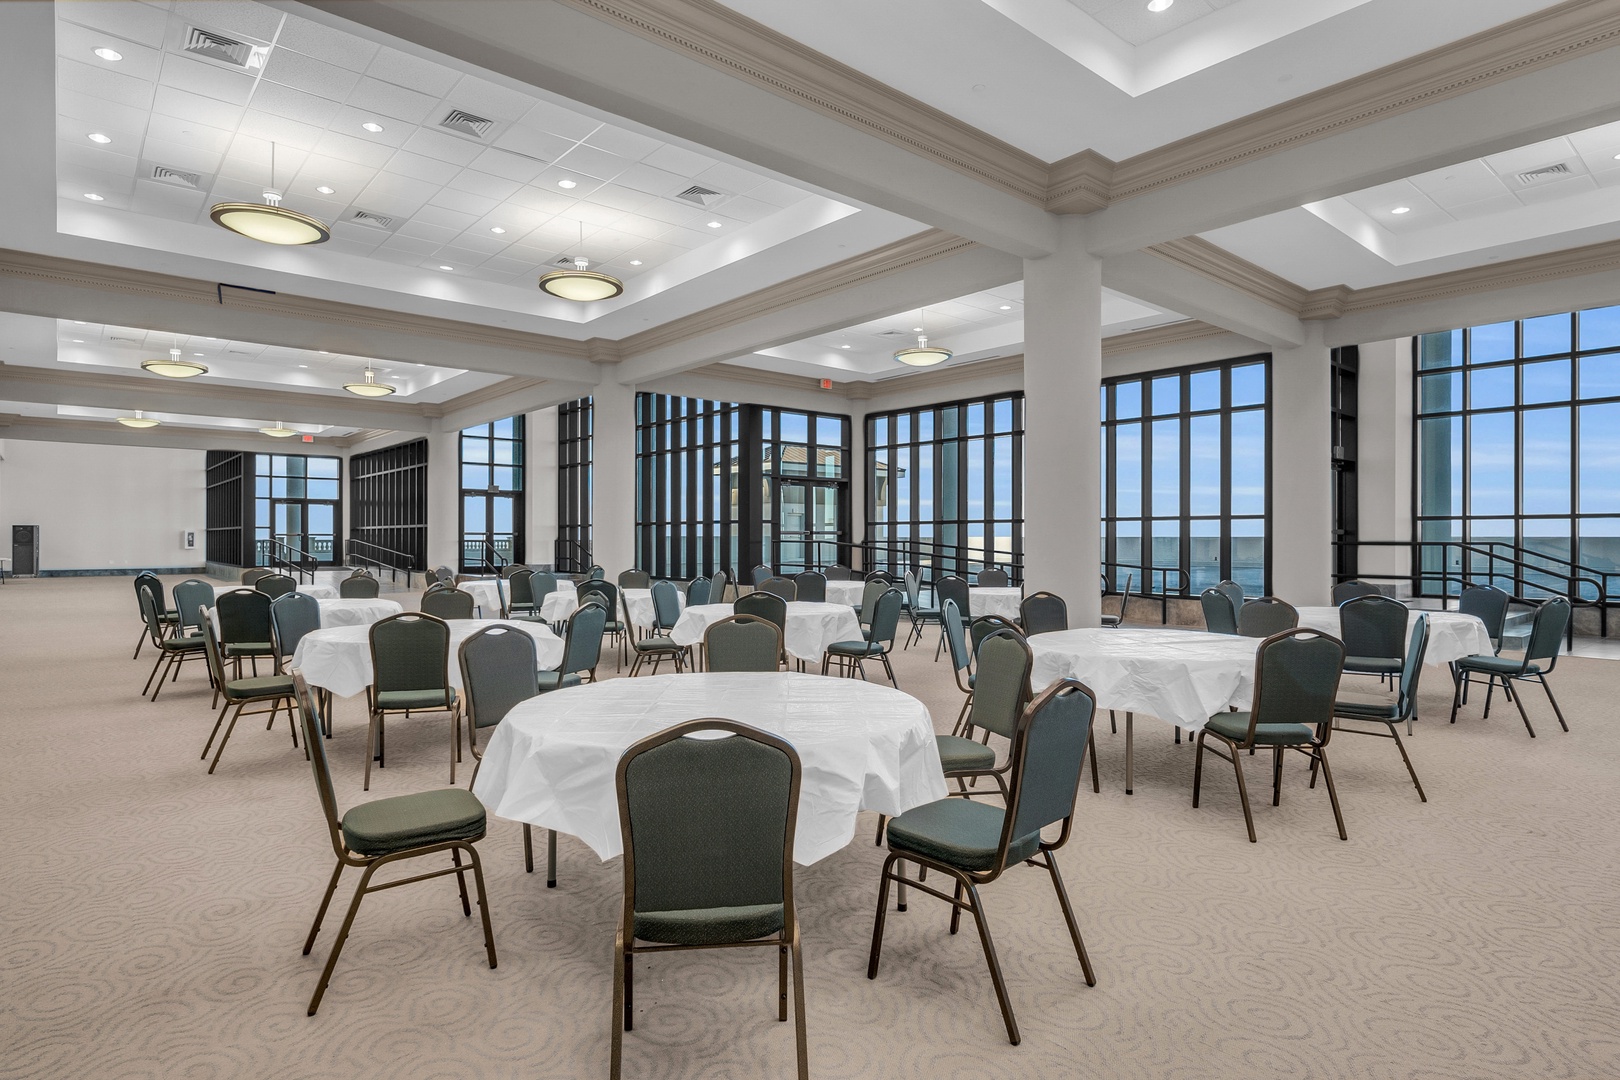 16th floor meeting/event room